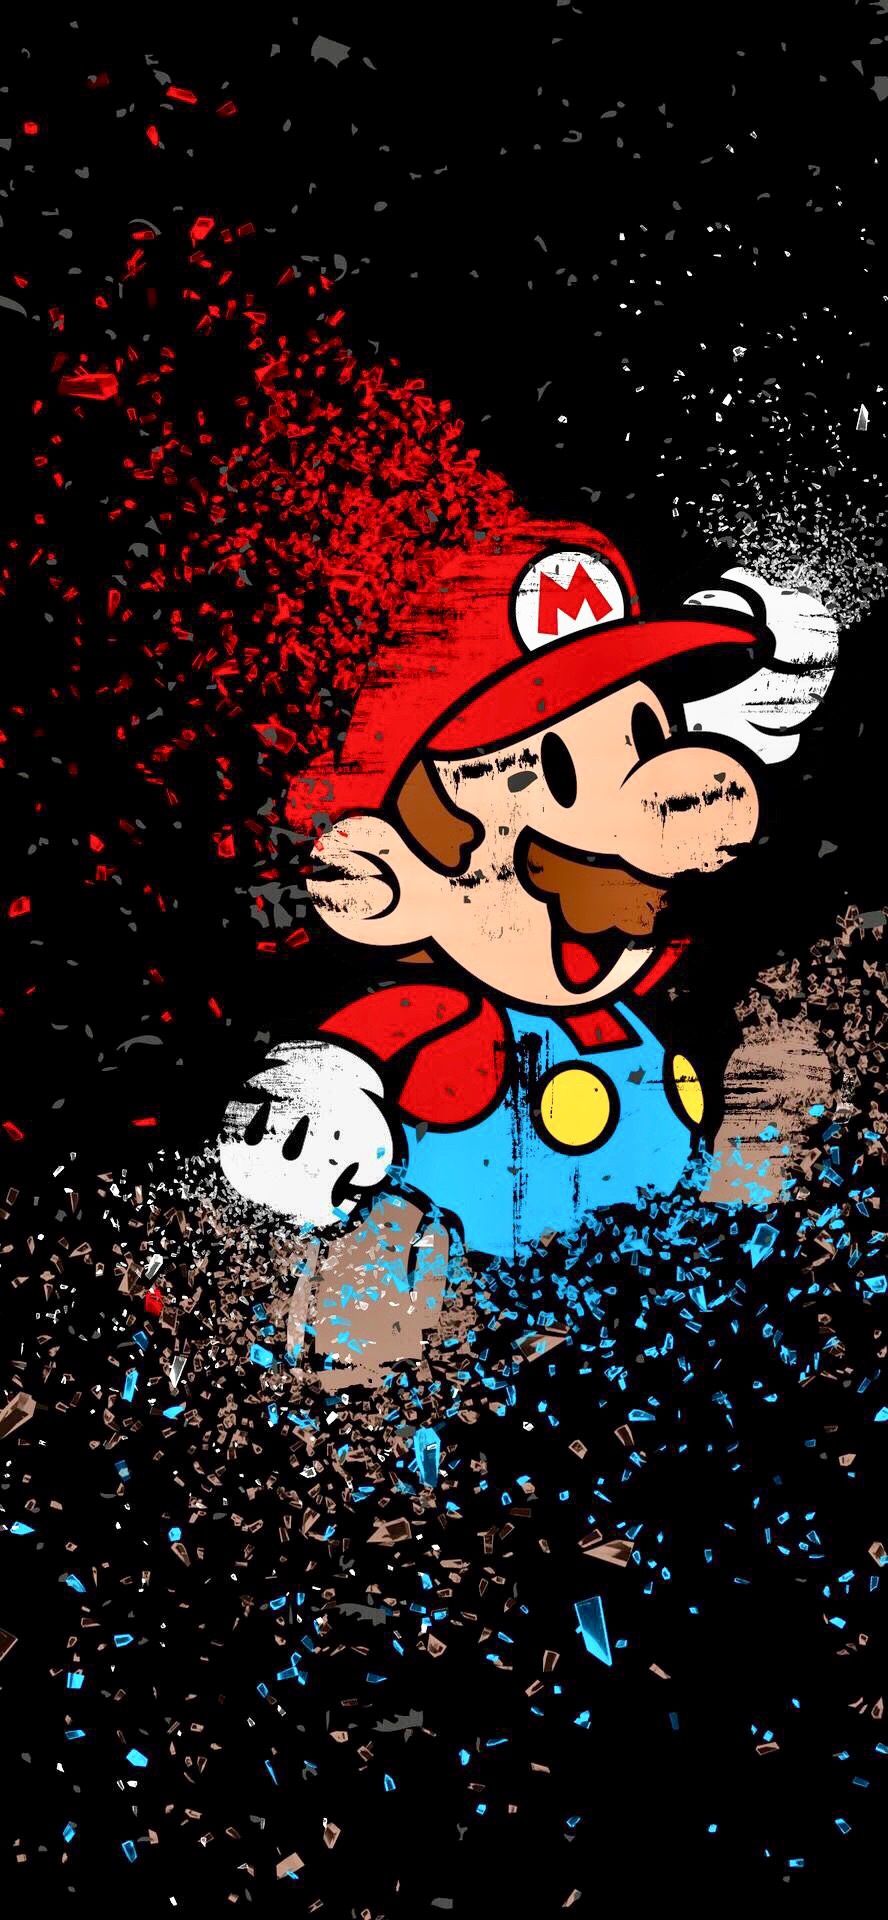 Wallpaper Of Mario